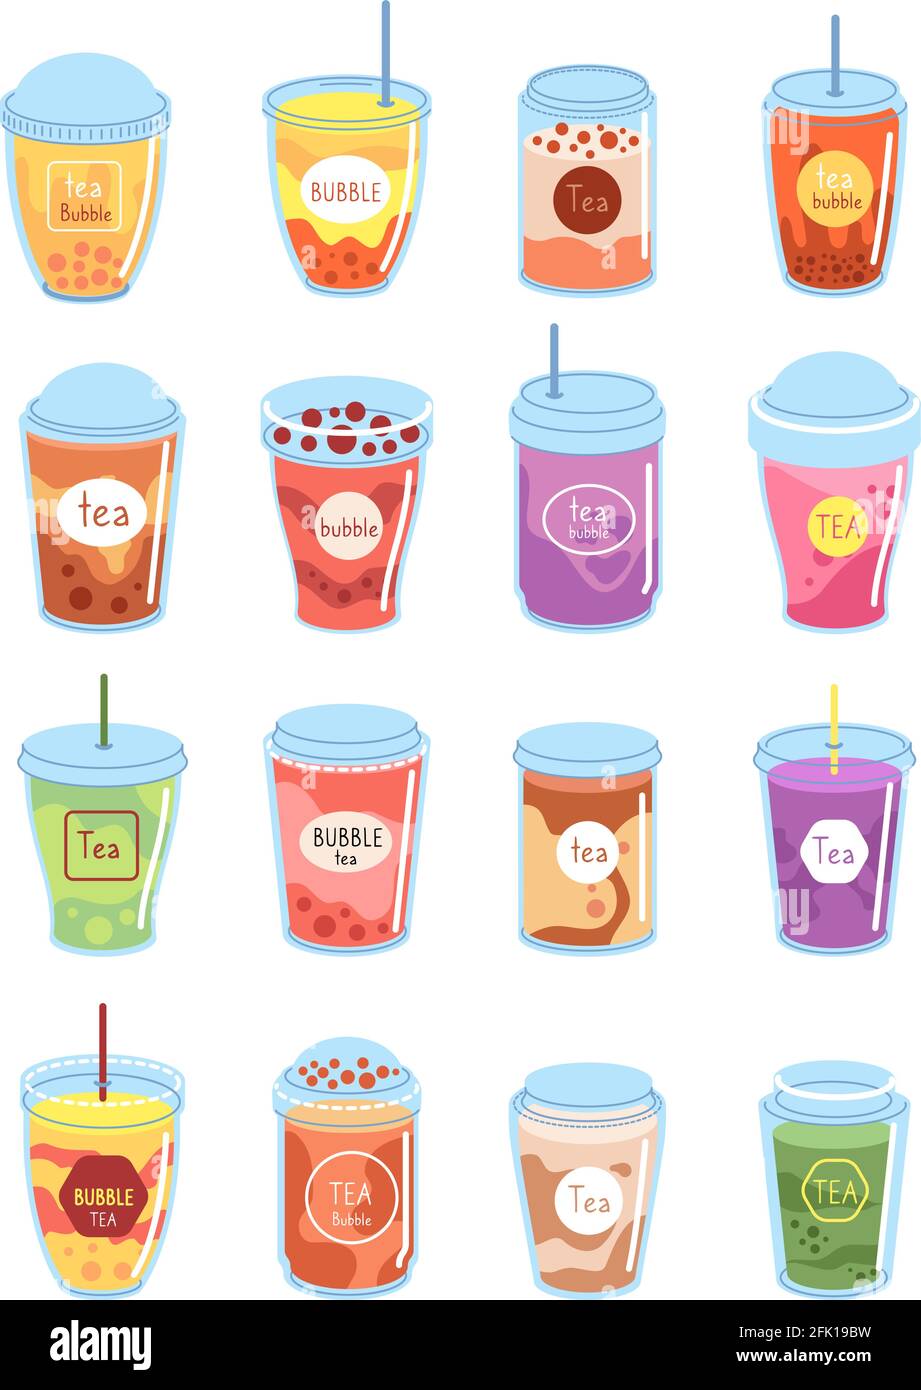 https://c8.alamy.com/comp/2FK19BW/bubble-tea-boba-milk-dessert-cup-drink-taiwan-drinking-lifestyle-cold-latte-mocha-coffee-fruit-smoothie-milkshake-vector-illustration-2FK19BW.jpg